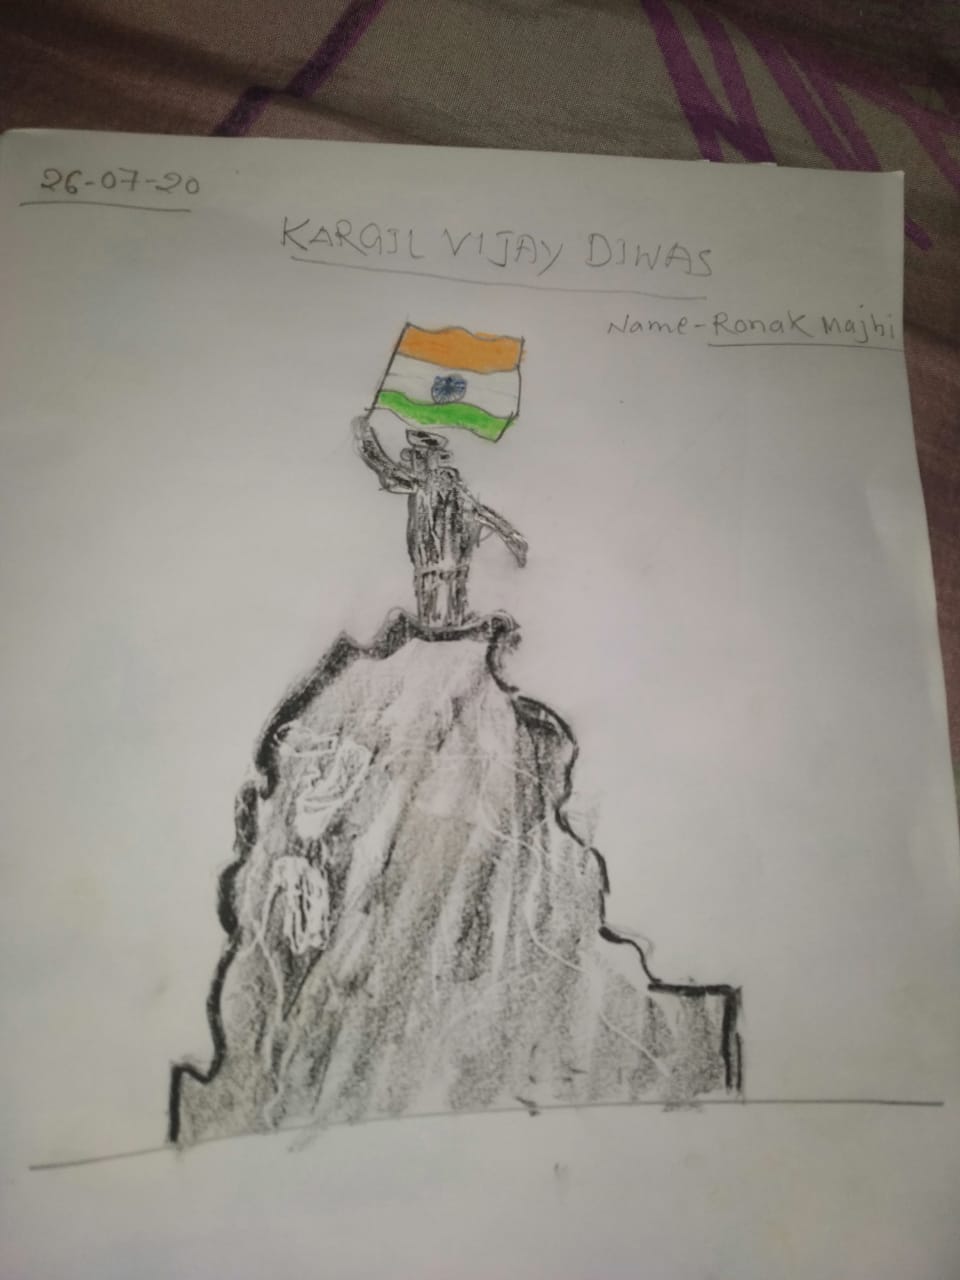 On Kargil Vijay Diwas, Salutes our national heroes! Jai Hind Vande Mataram  🇮🇳 | Instagram